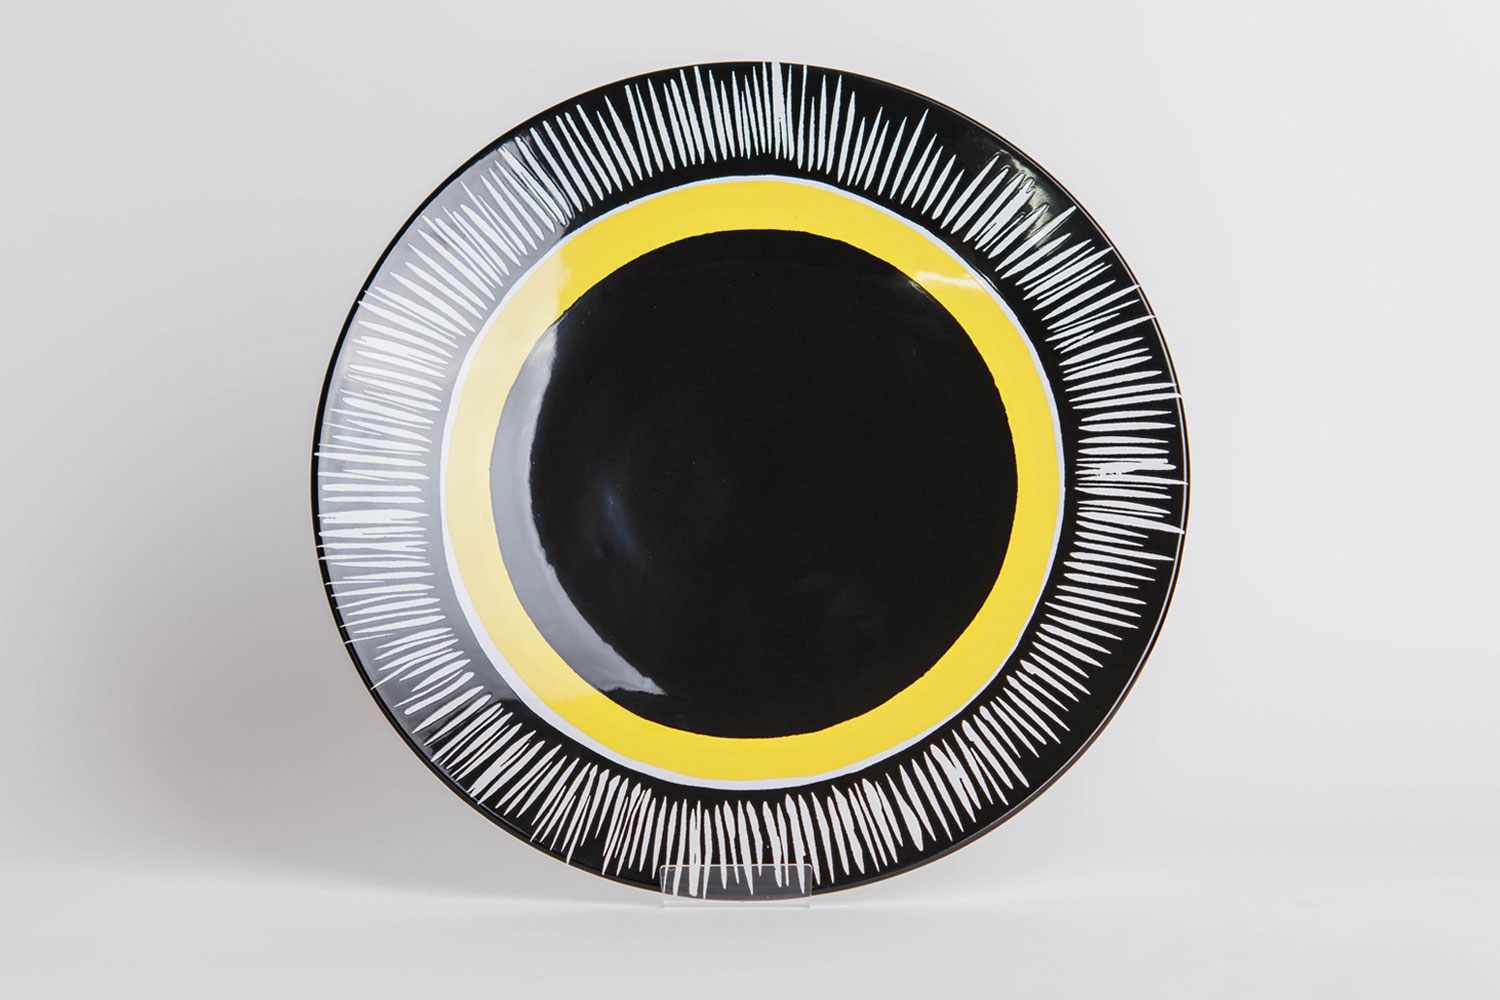 Trewellard Suns, No 4, 1990 – Limited Edition Ceramic Platter